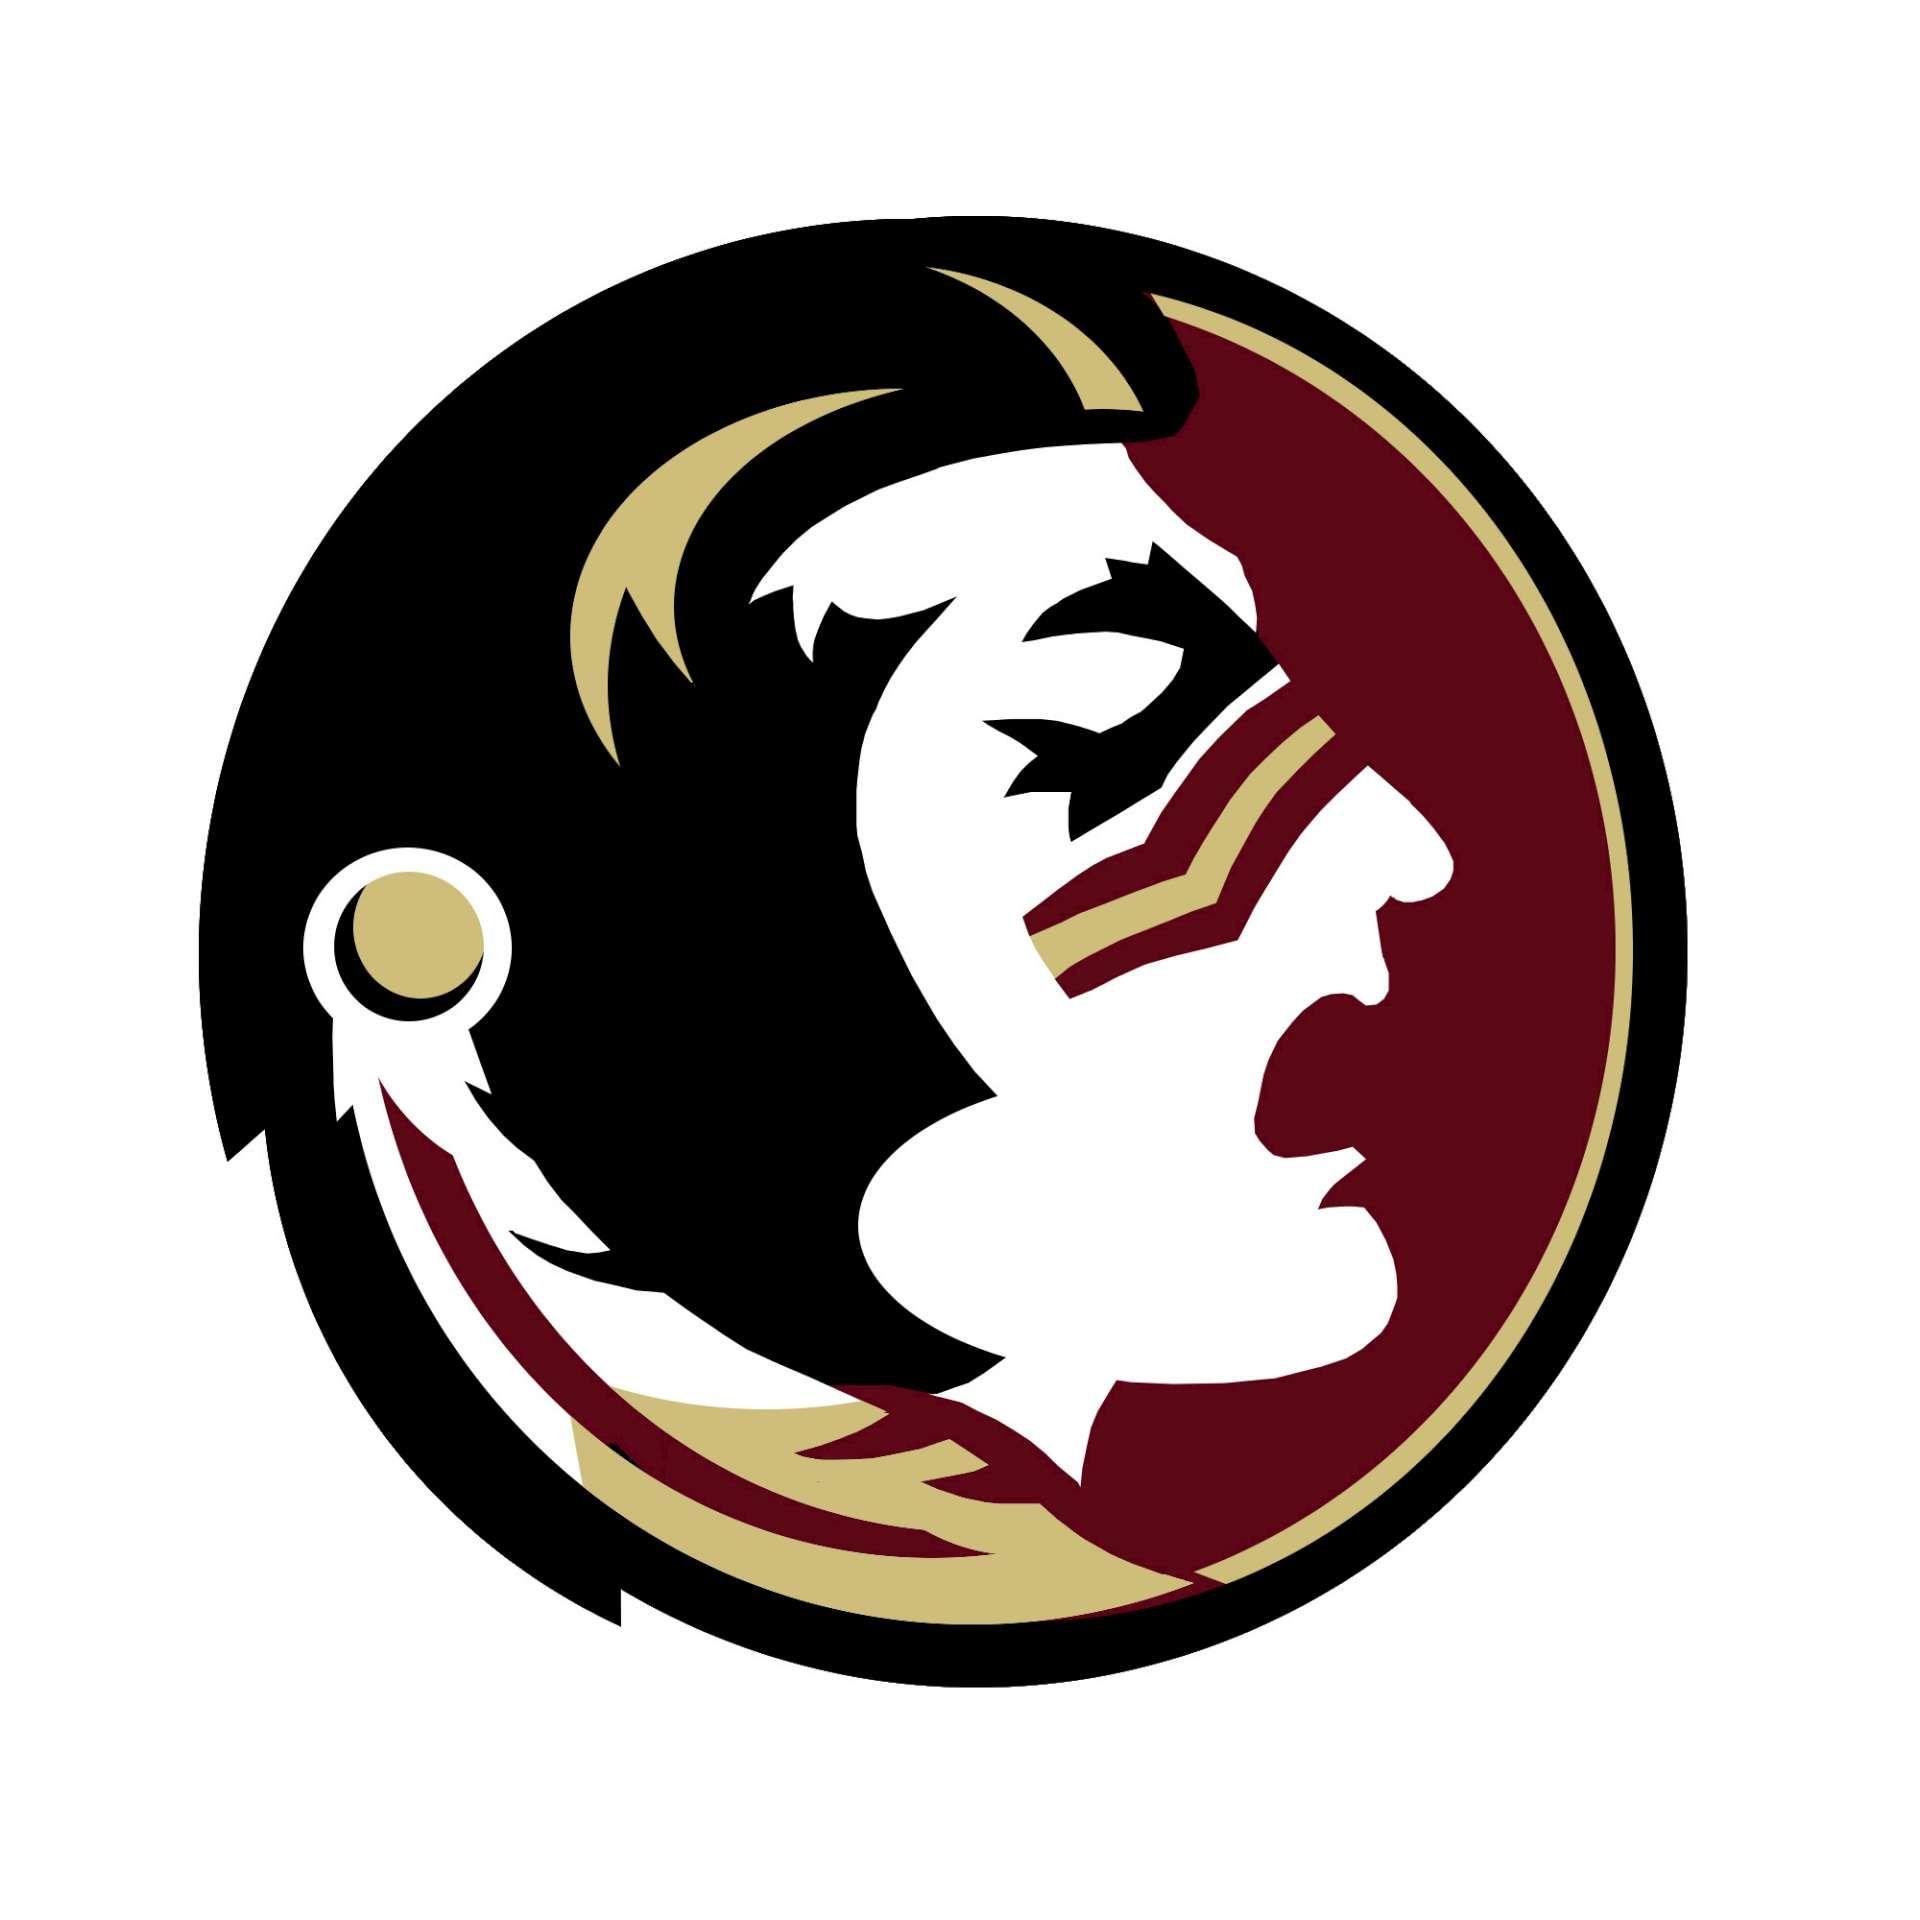 Florida State Seminoles New Logo - New Florida State Seminoles Logo N2 free image